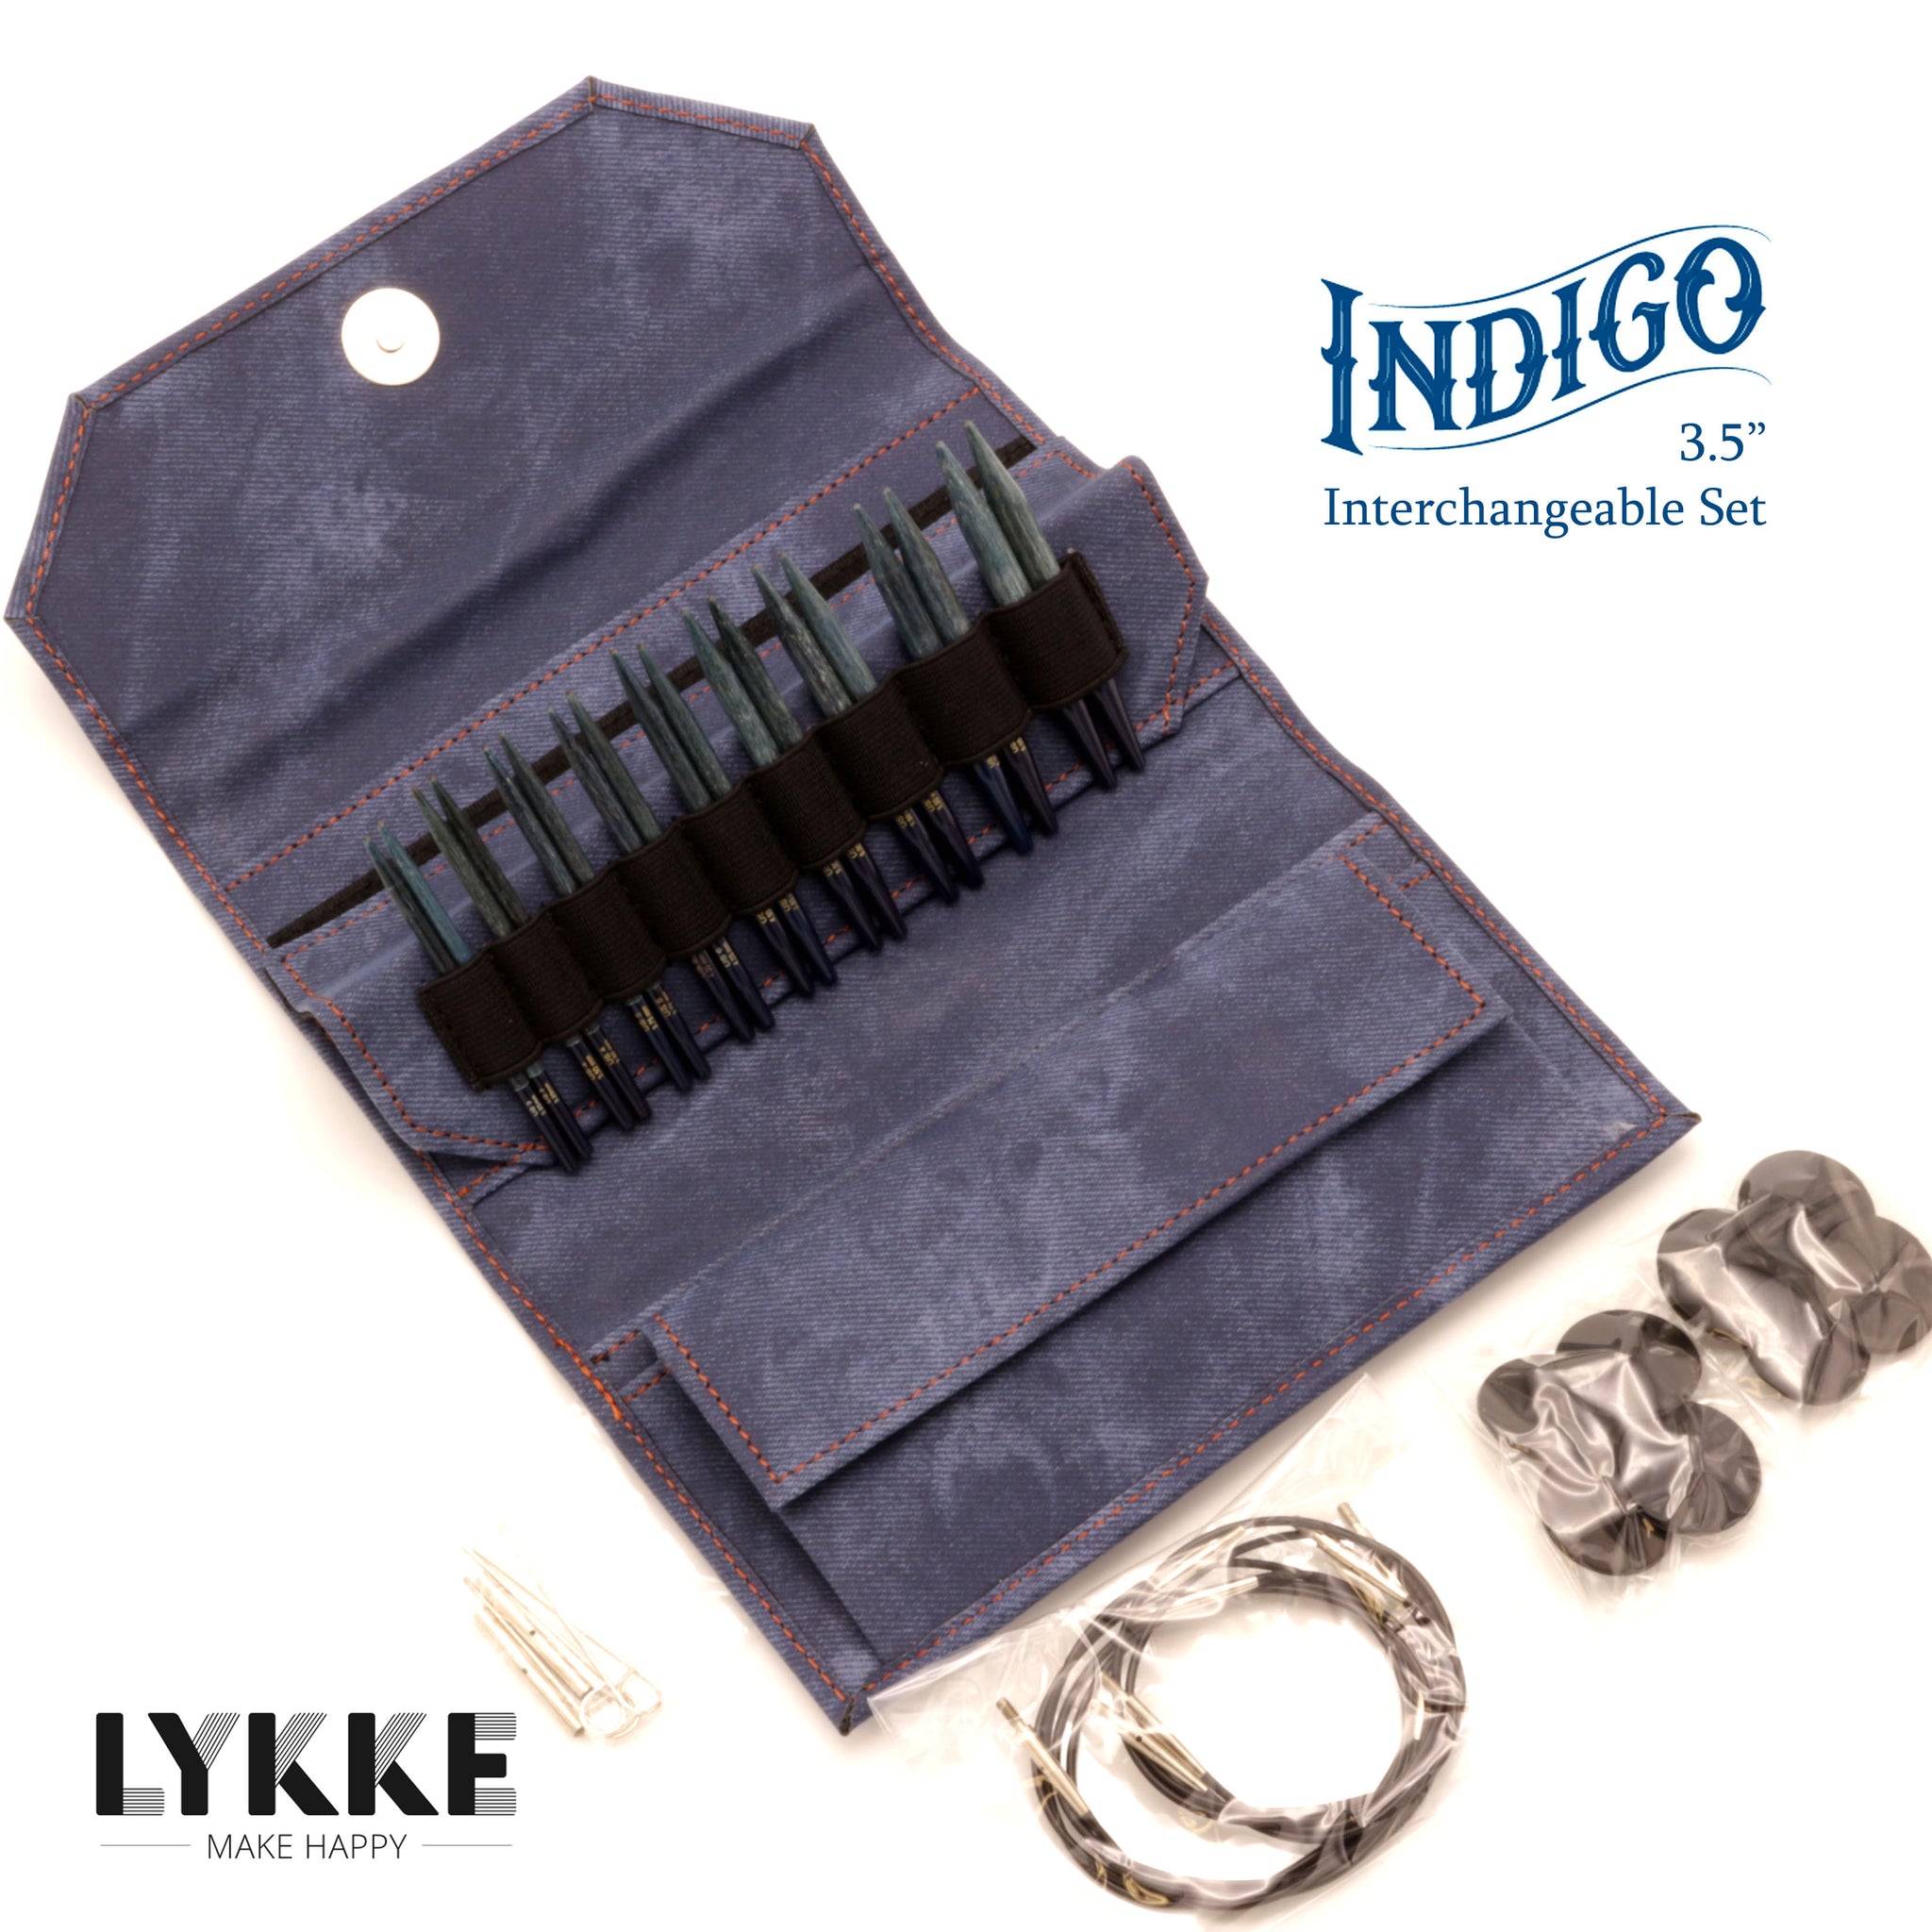 1 piece Lykke Indigo 3.5 inch (7cm) Interchange Circular Needle